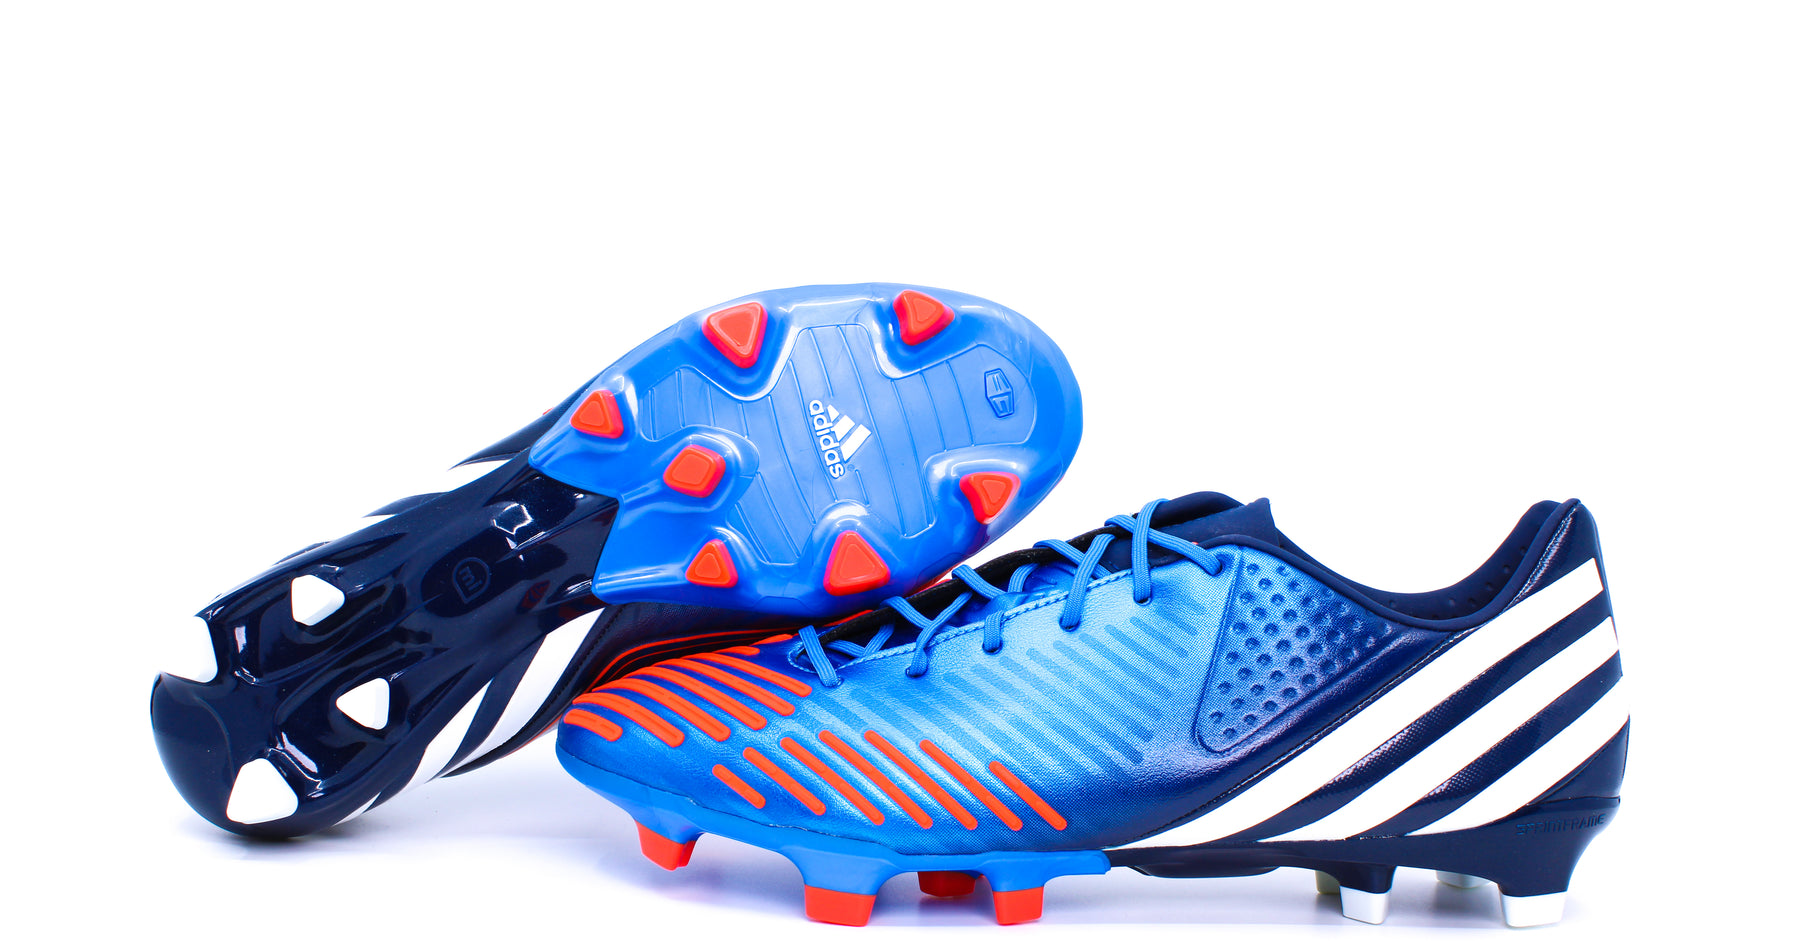 in de rij gaan staan Enten Tomaat Adidas Predator LZ TRX FG Blue/White/Infrared (V20975) – Retro Soccer Cleats